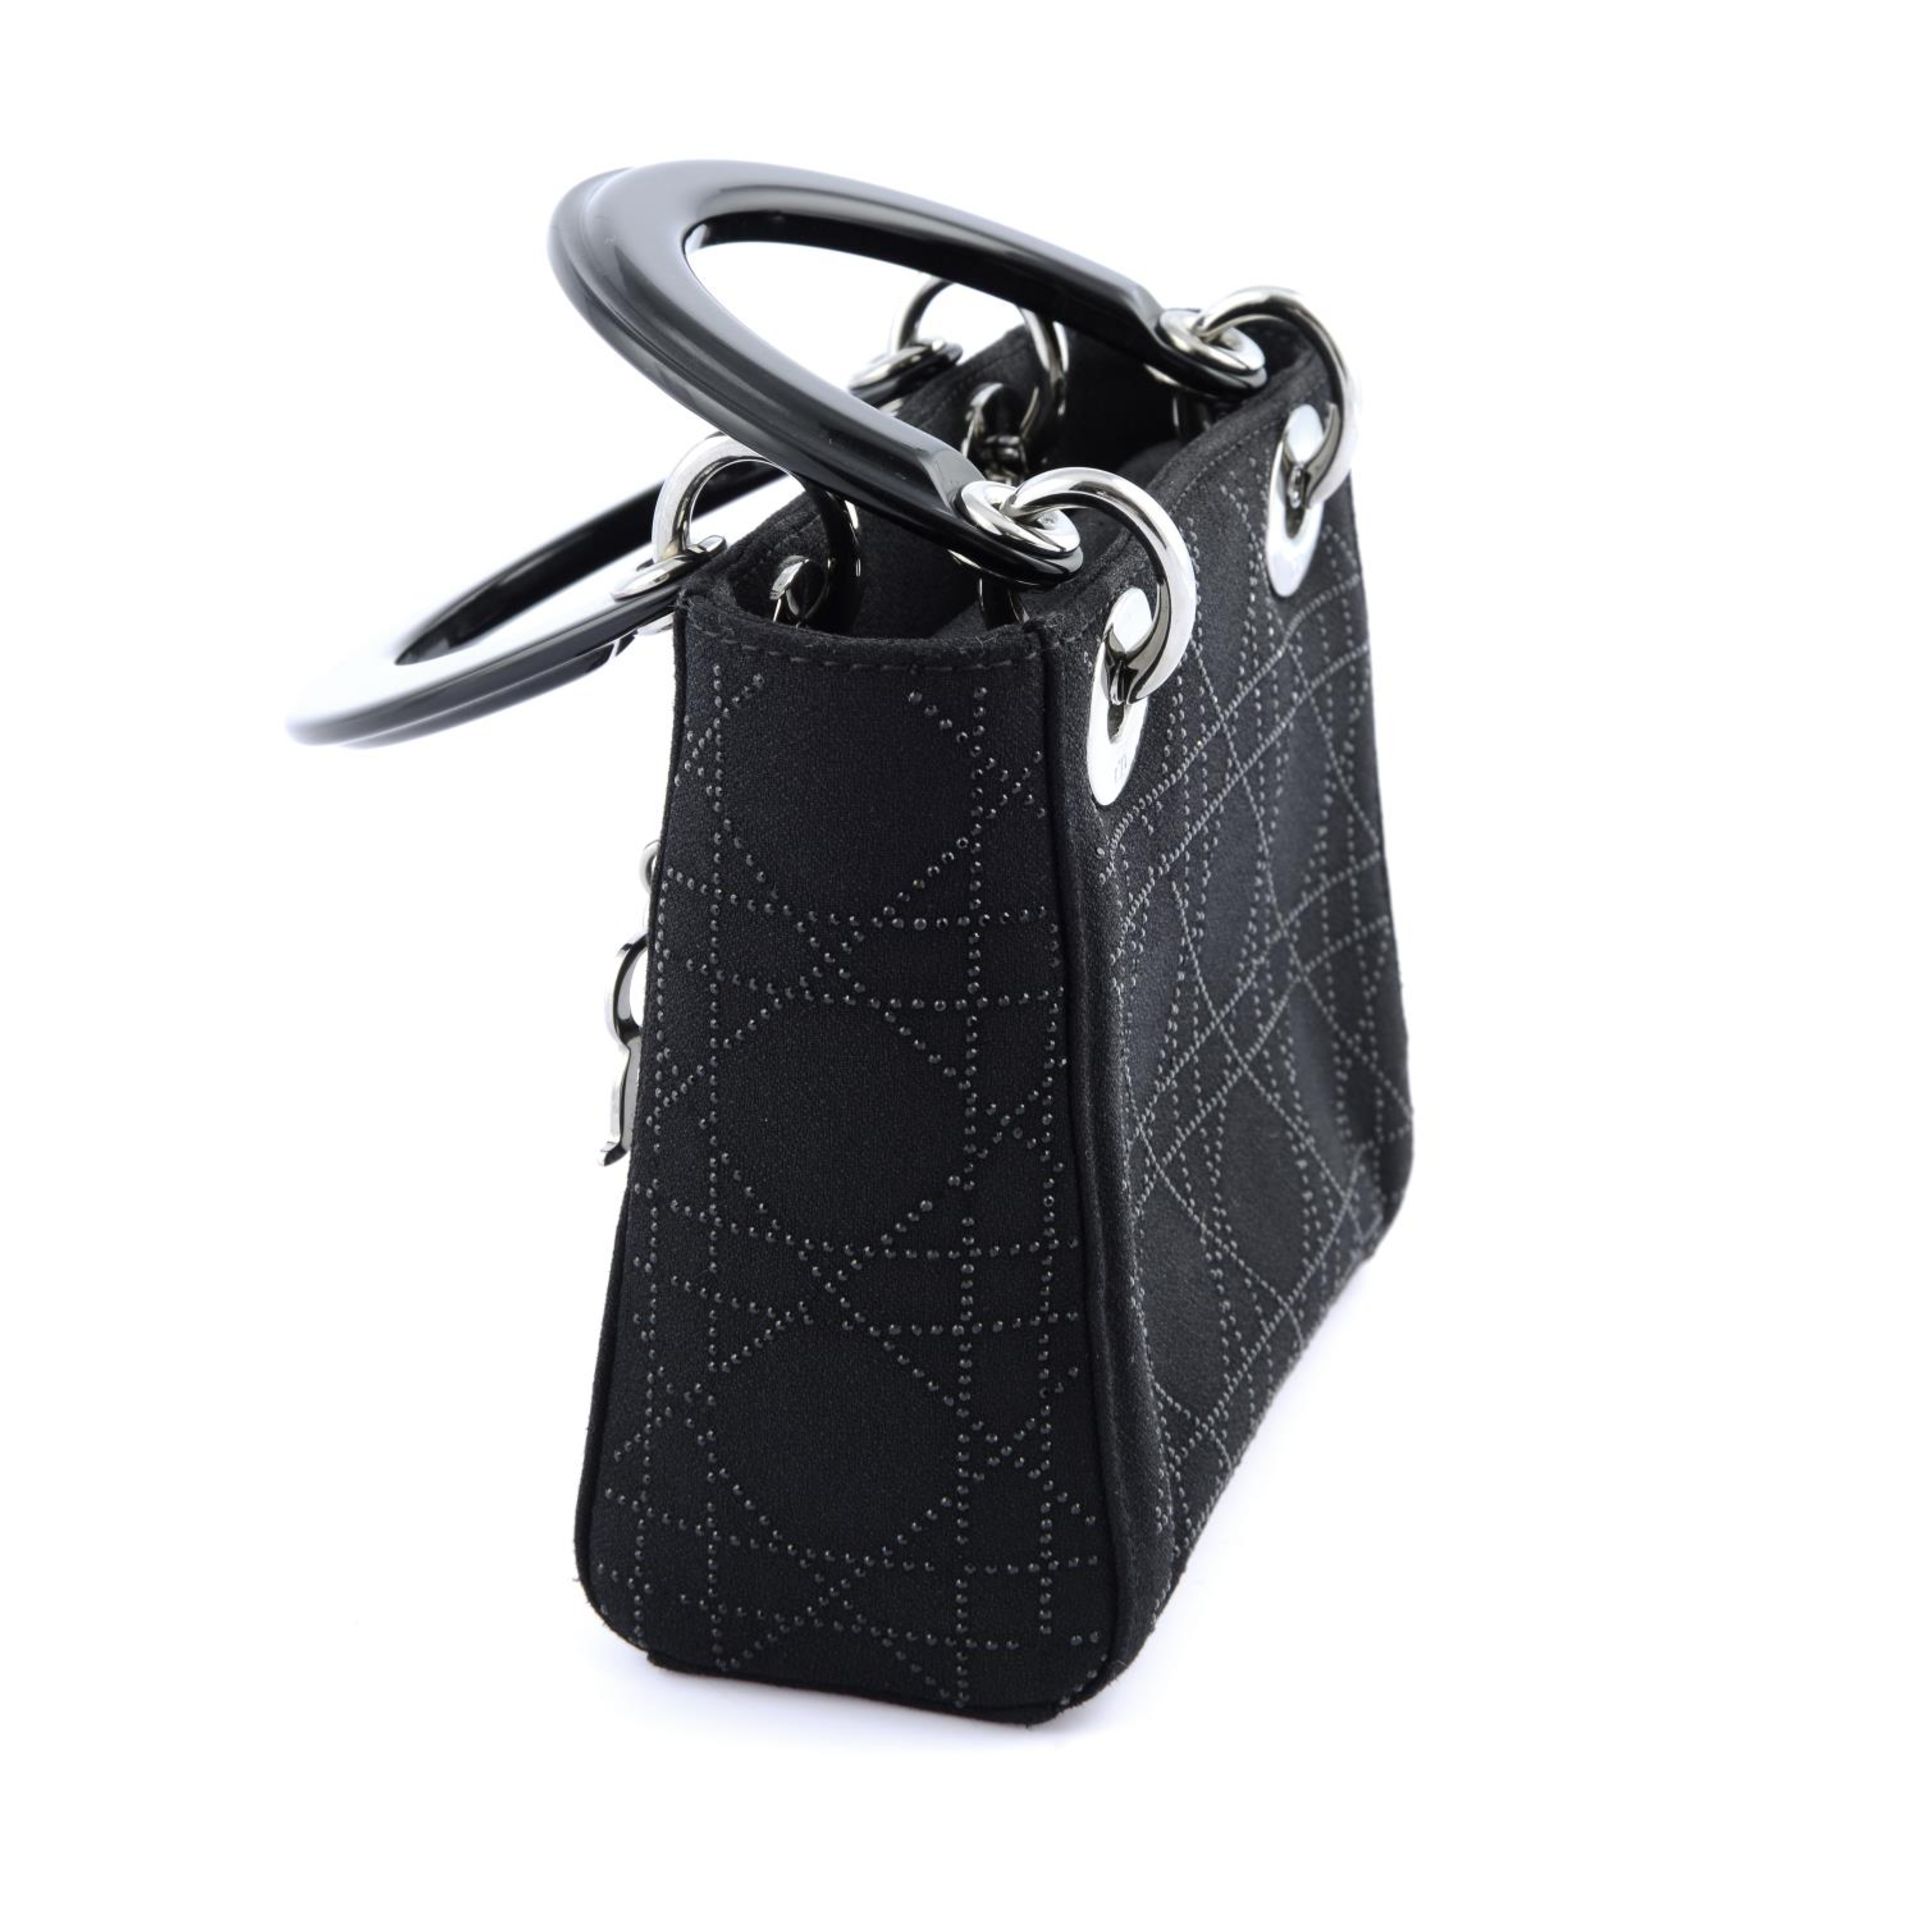 CHRISTIAN DIOR - a limited edition Mini Lady Dior handbag. - Bild 3 aus 4